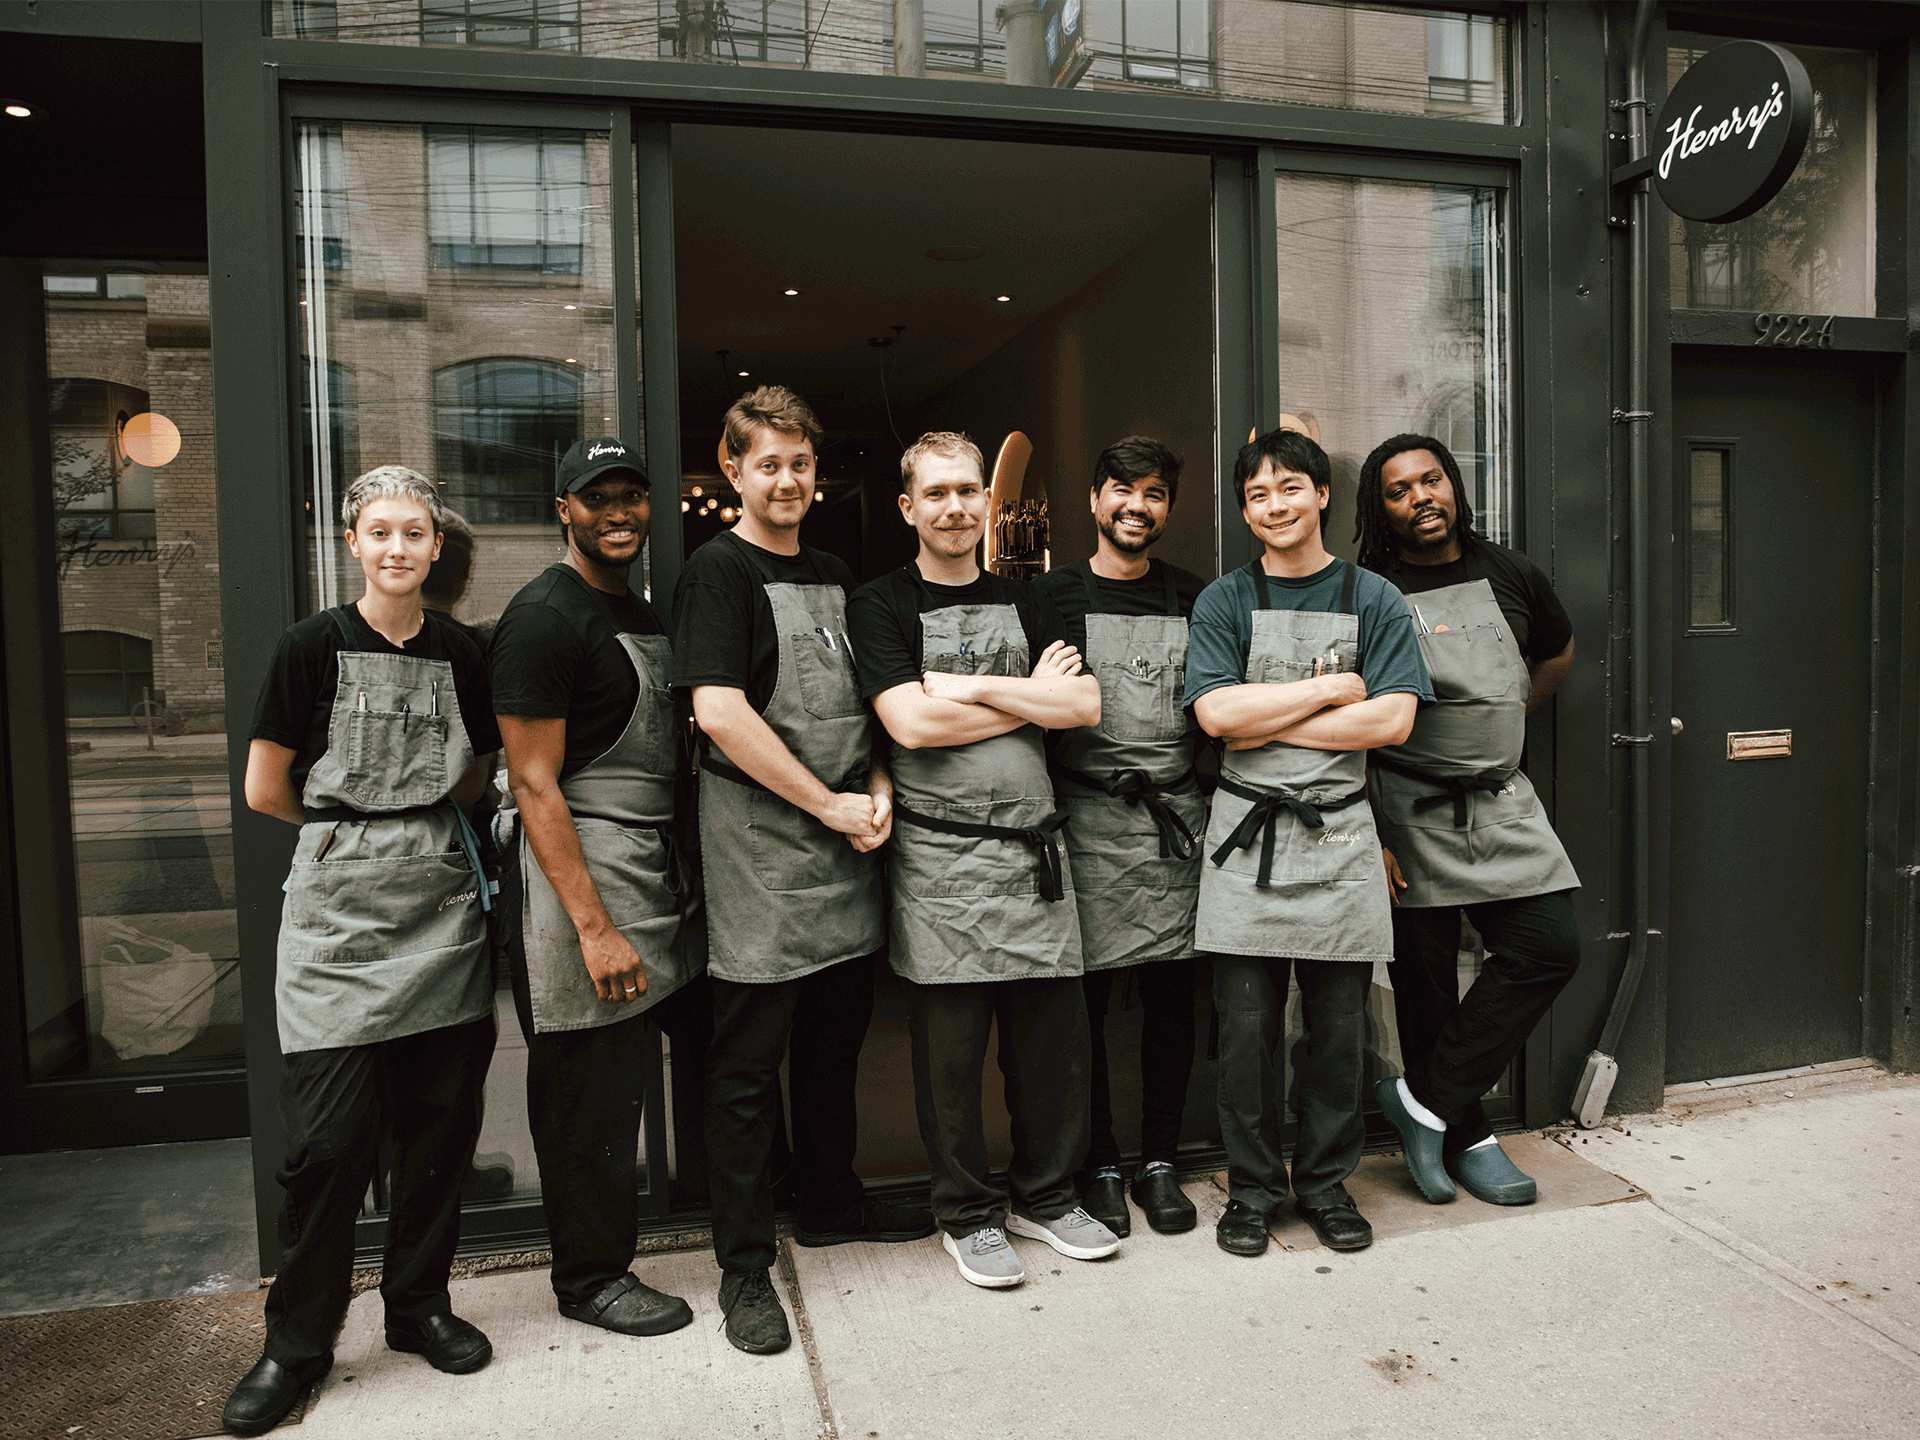 Best new restaurants Toronto | The team at Henry's